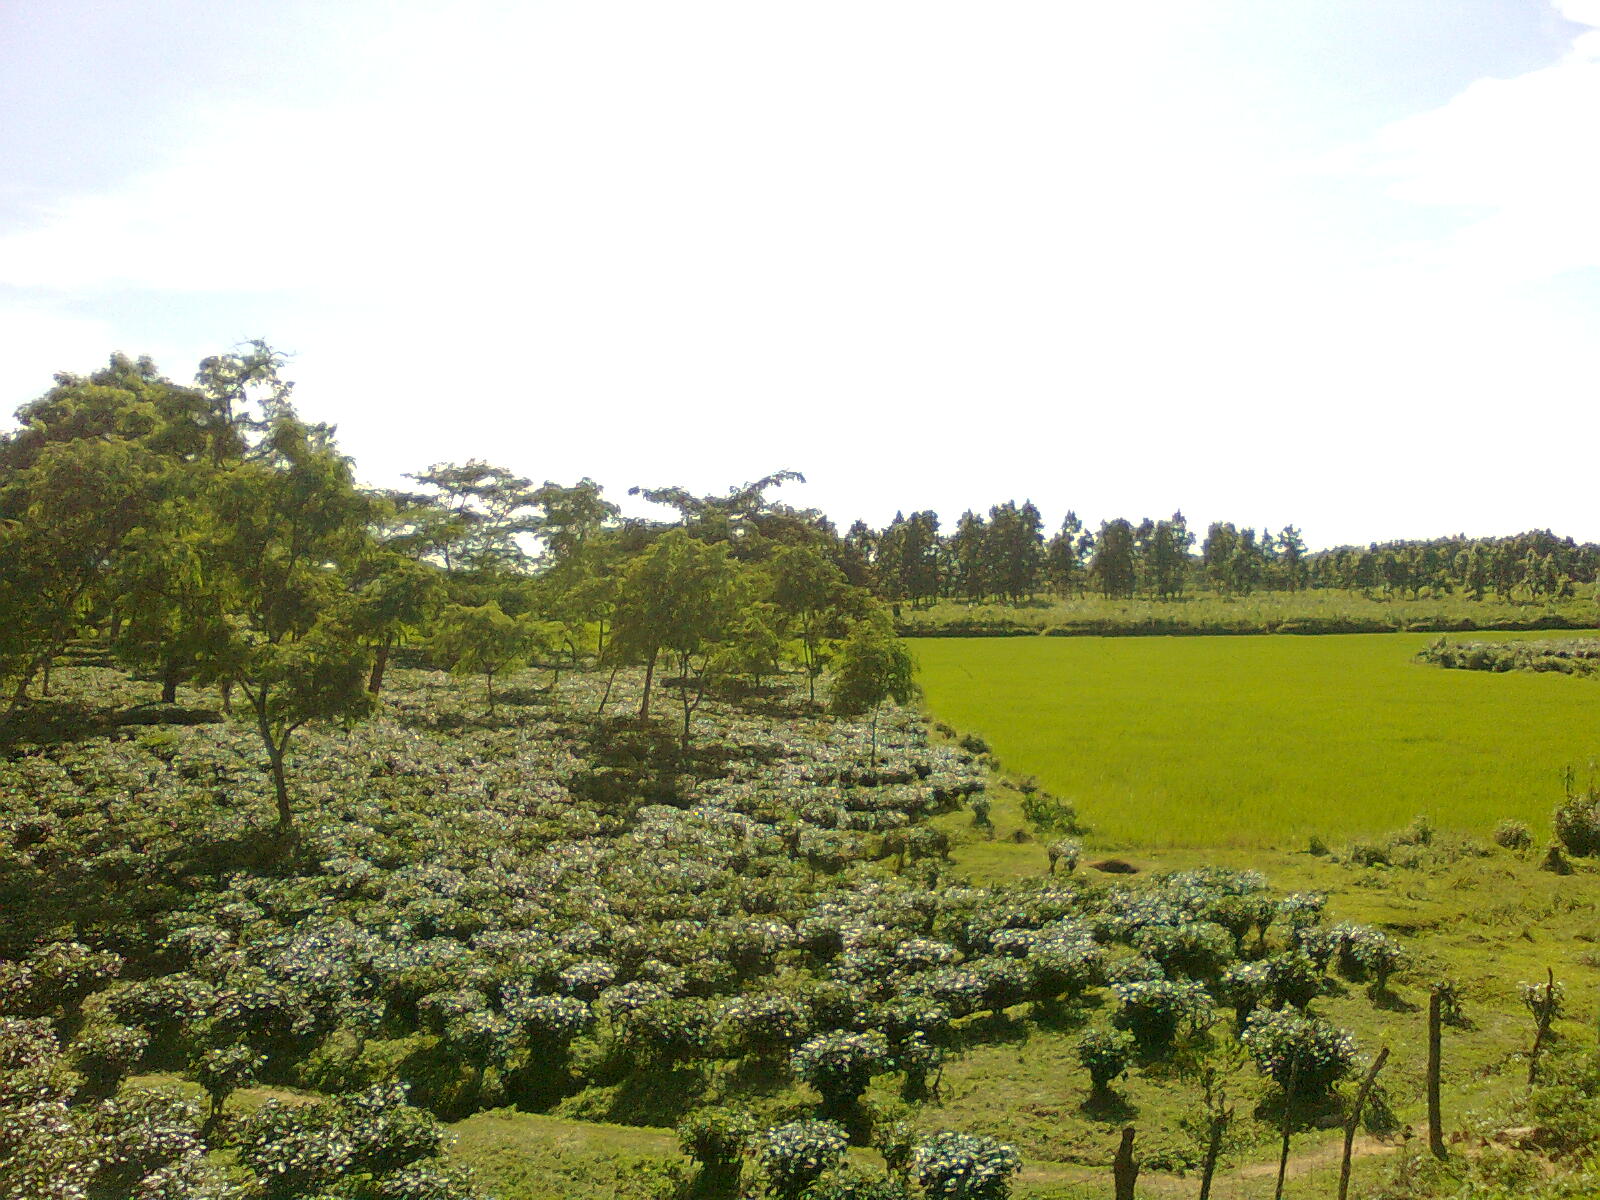 Landscape_of_Goalpara_District_of_Assam_3012.jpg